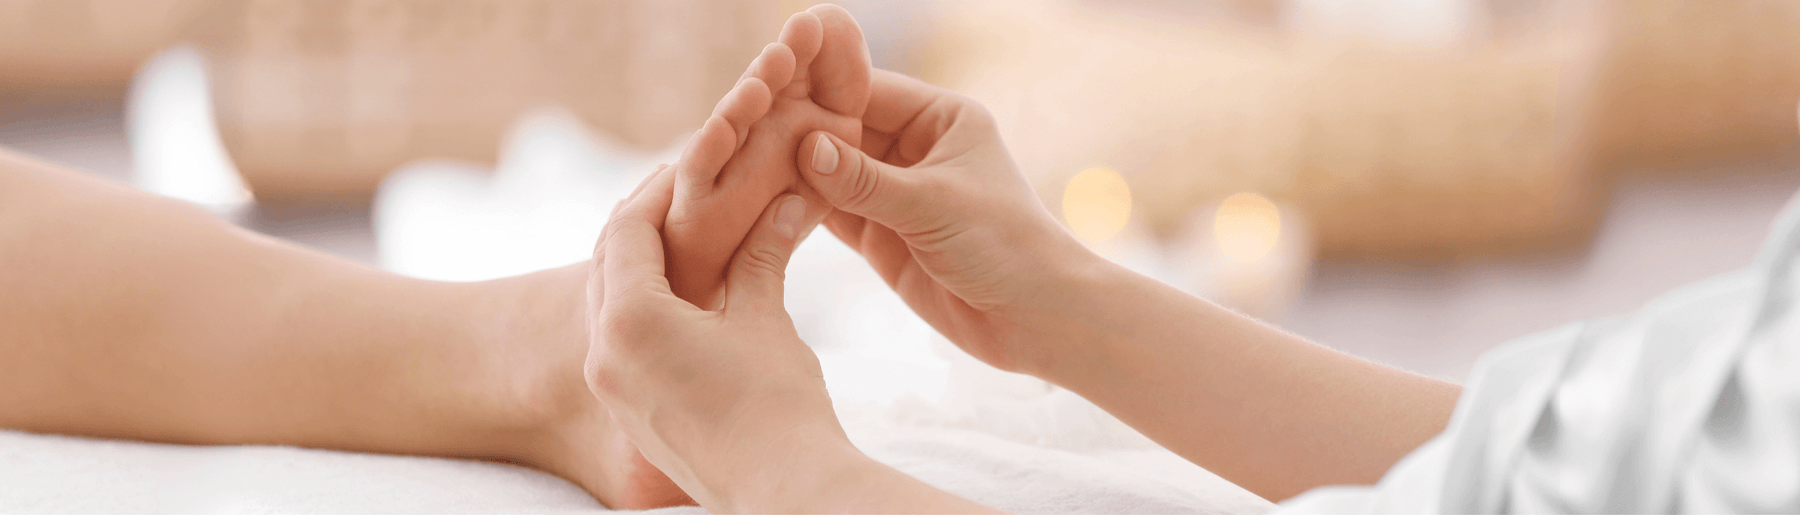 Foot massage benefits